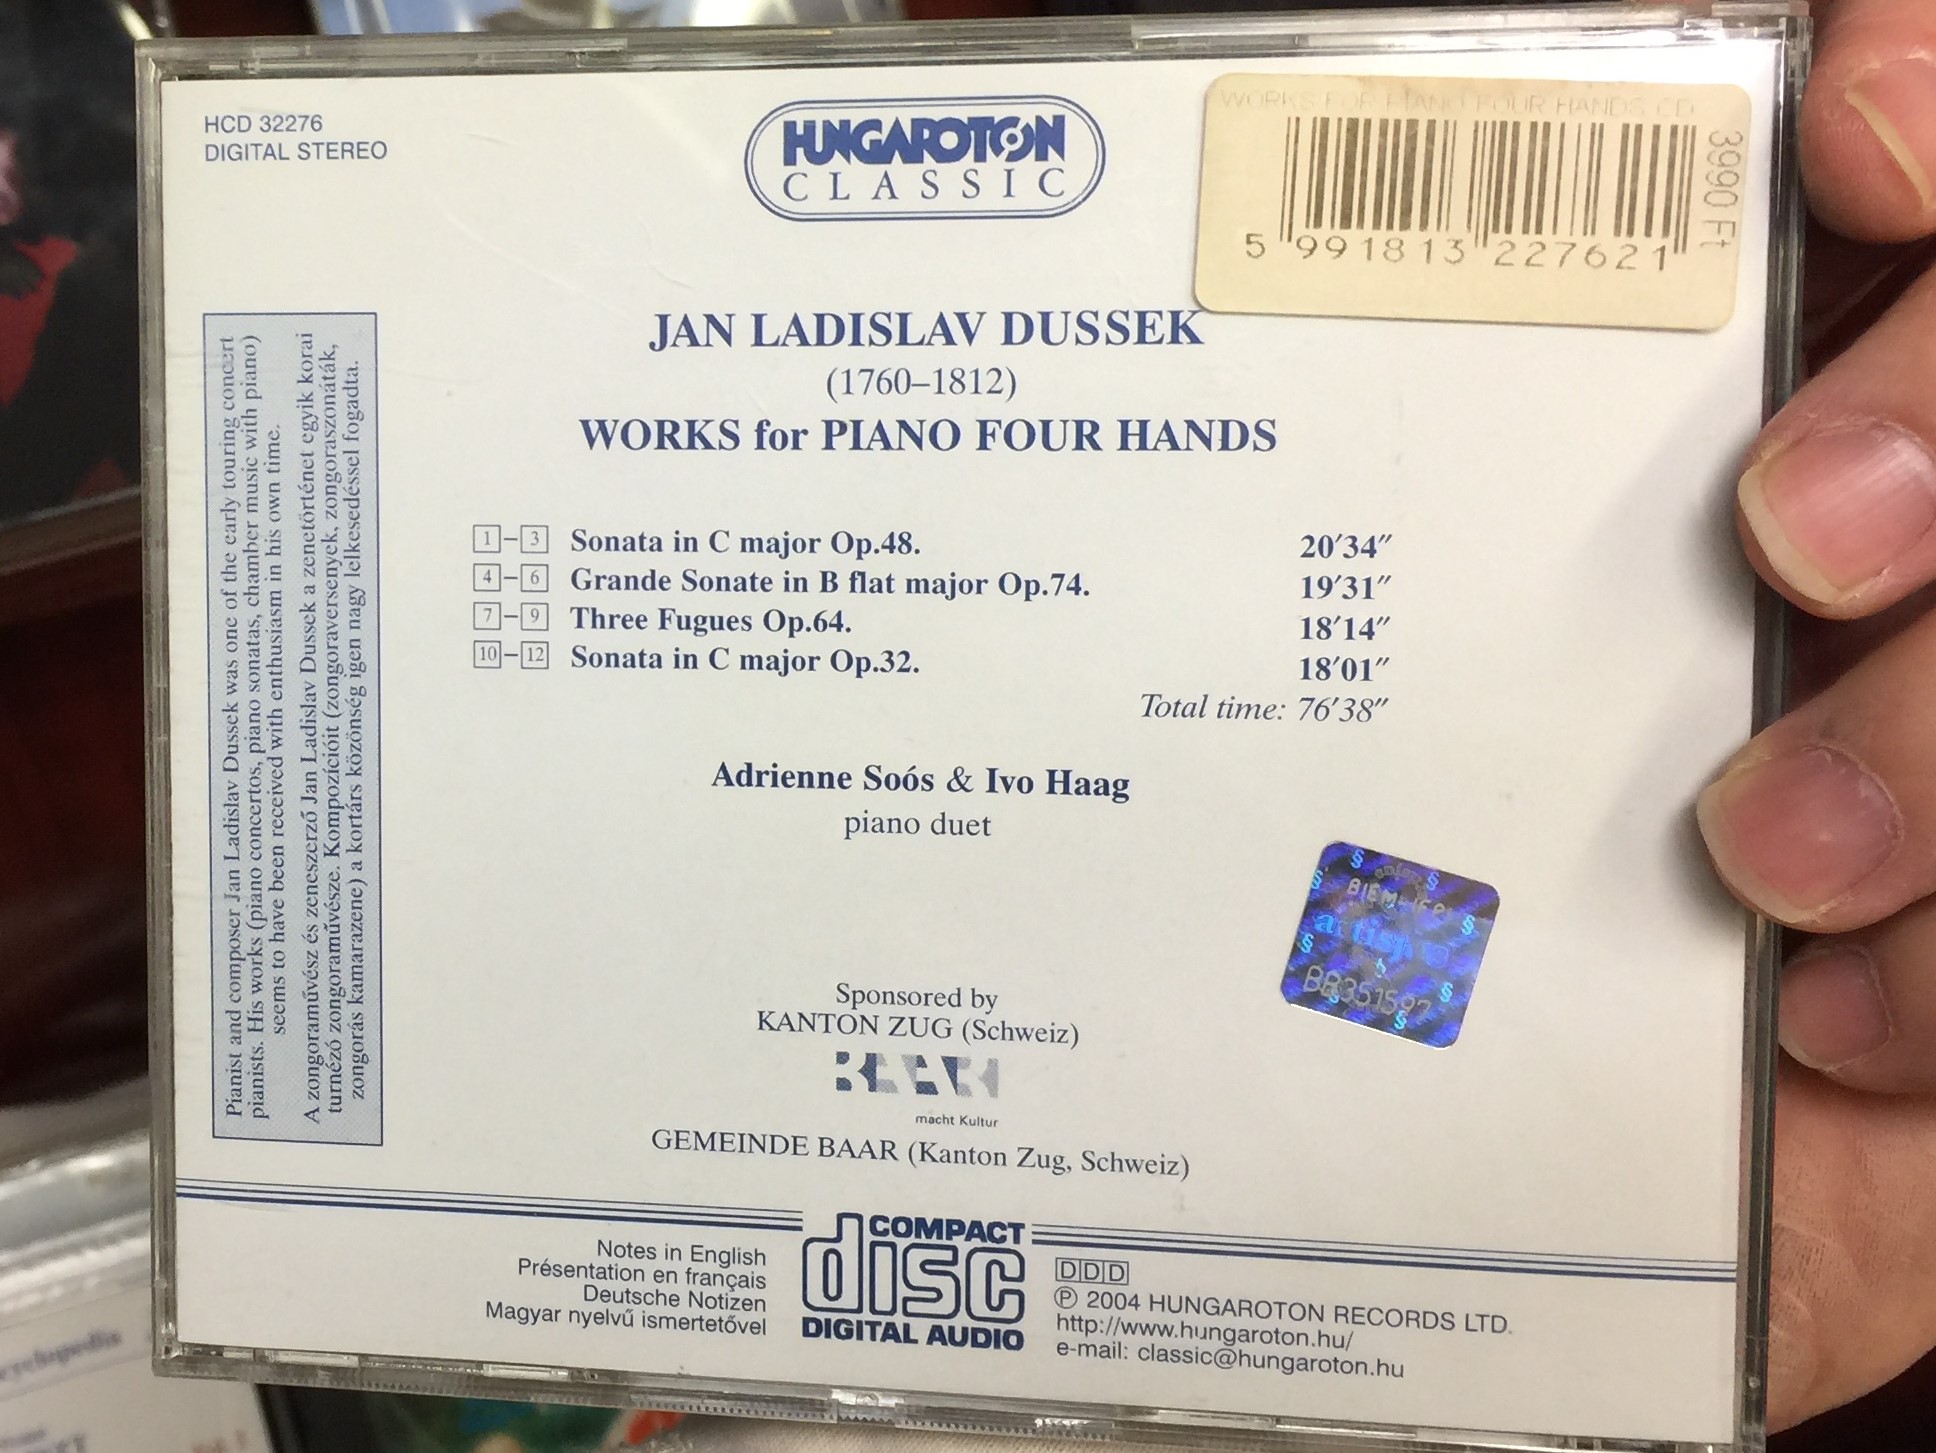 jan-ladislav-dussek-works-for-piano-four-hands-adrienne-soos-ivo-haag-hungaroton-classic-audio-cd-2004-stereo-hcd-32276-2-.jpg